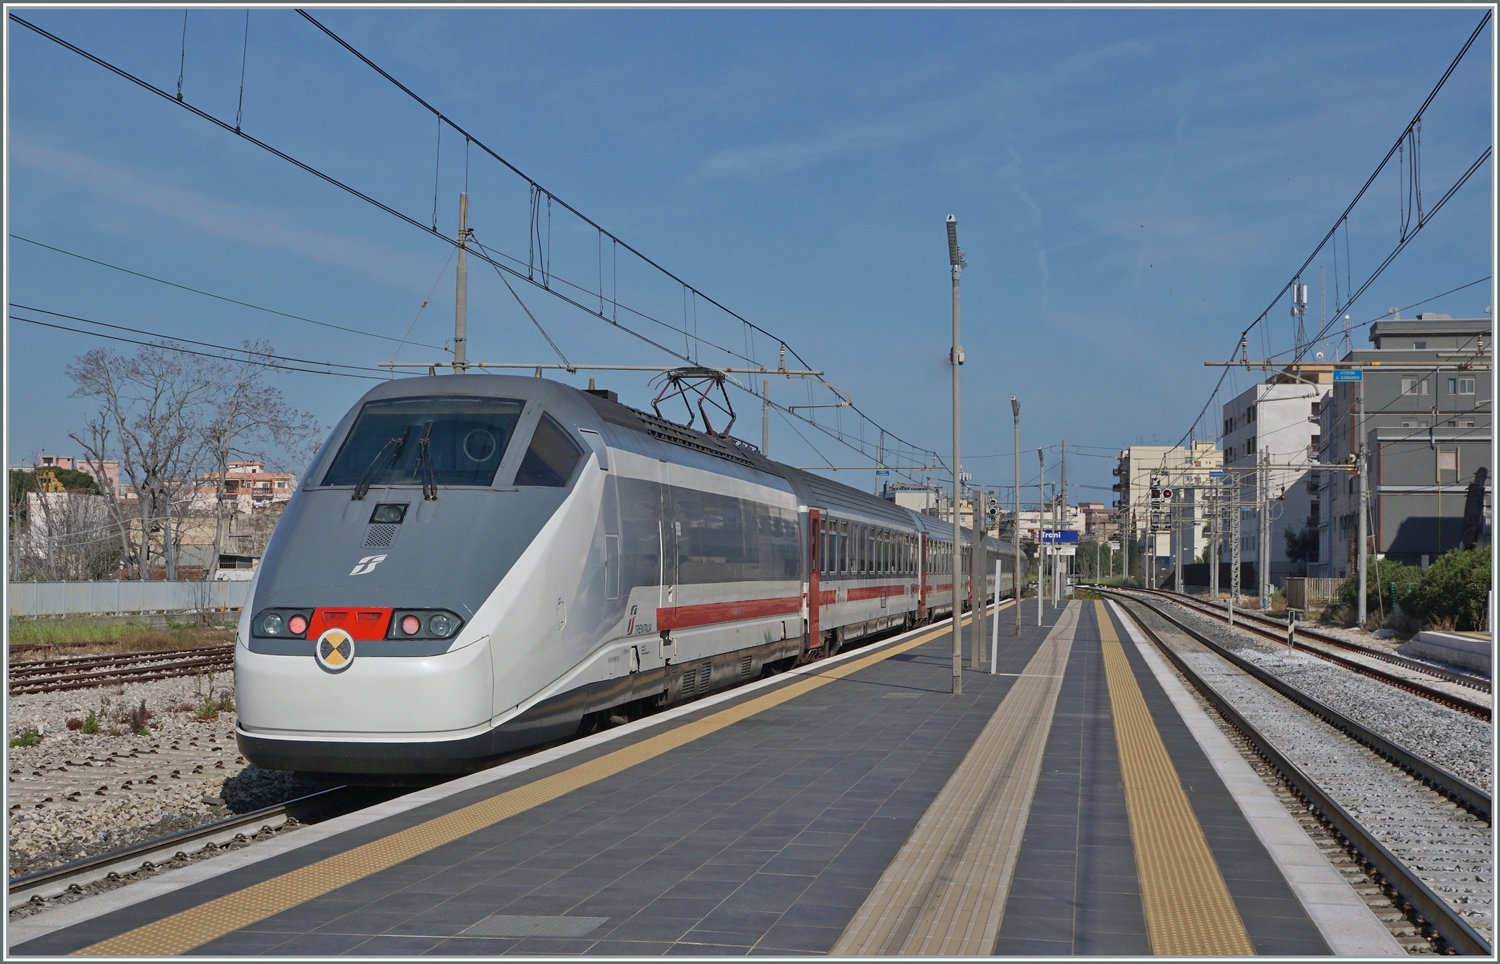 Der FS Trenitalia IC 608 von Lecce (ab 6:23) nach Bologna Centrale (an 15:00) verlasst nach seinem Halt Trani in Richtung Barletta.

22. April 2023